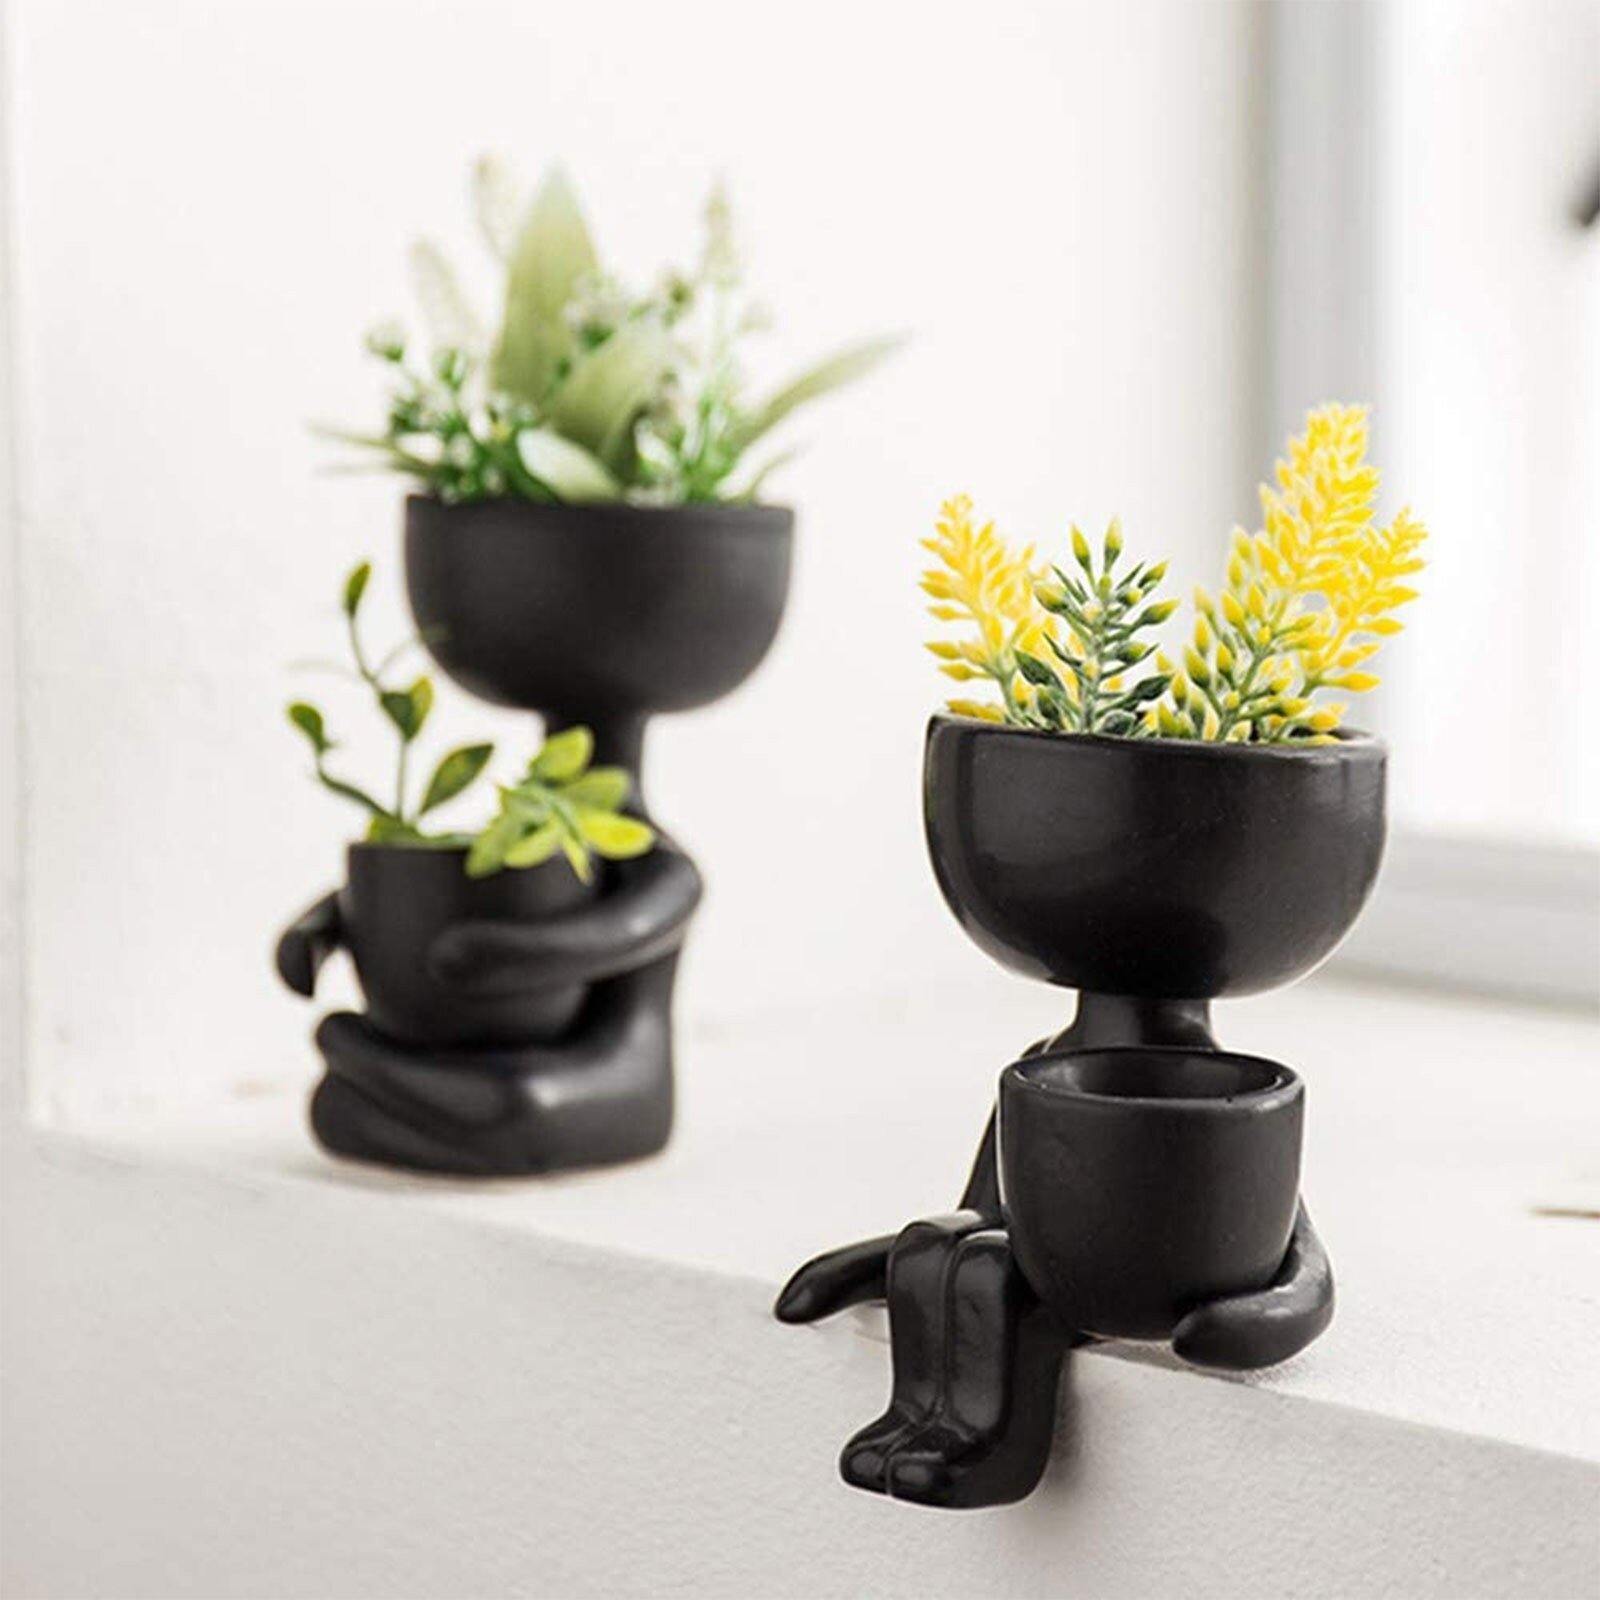 Pots & Planters Little Human Ceramic Succulent Planter sold by Fleurlovin, Free Shipping Worldwide